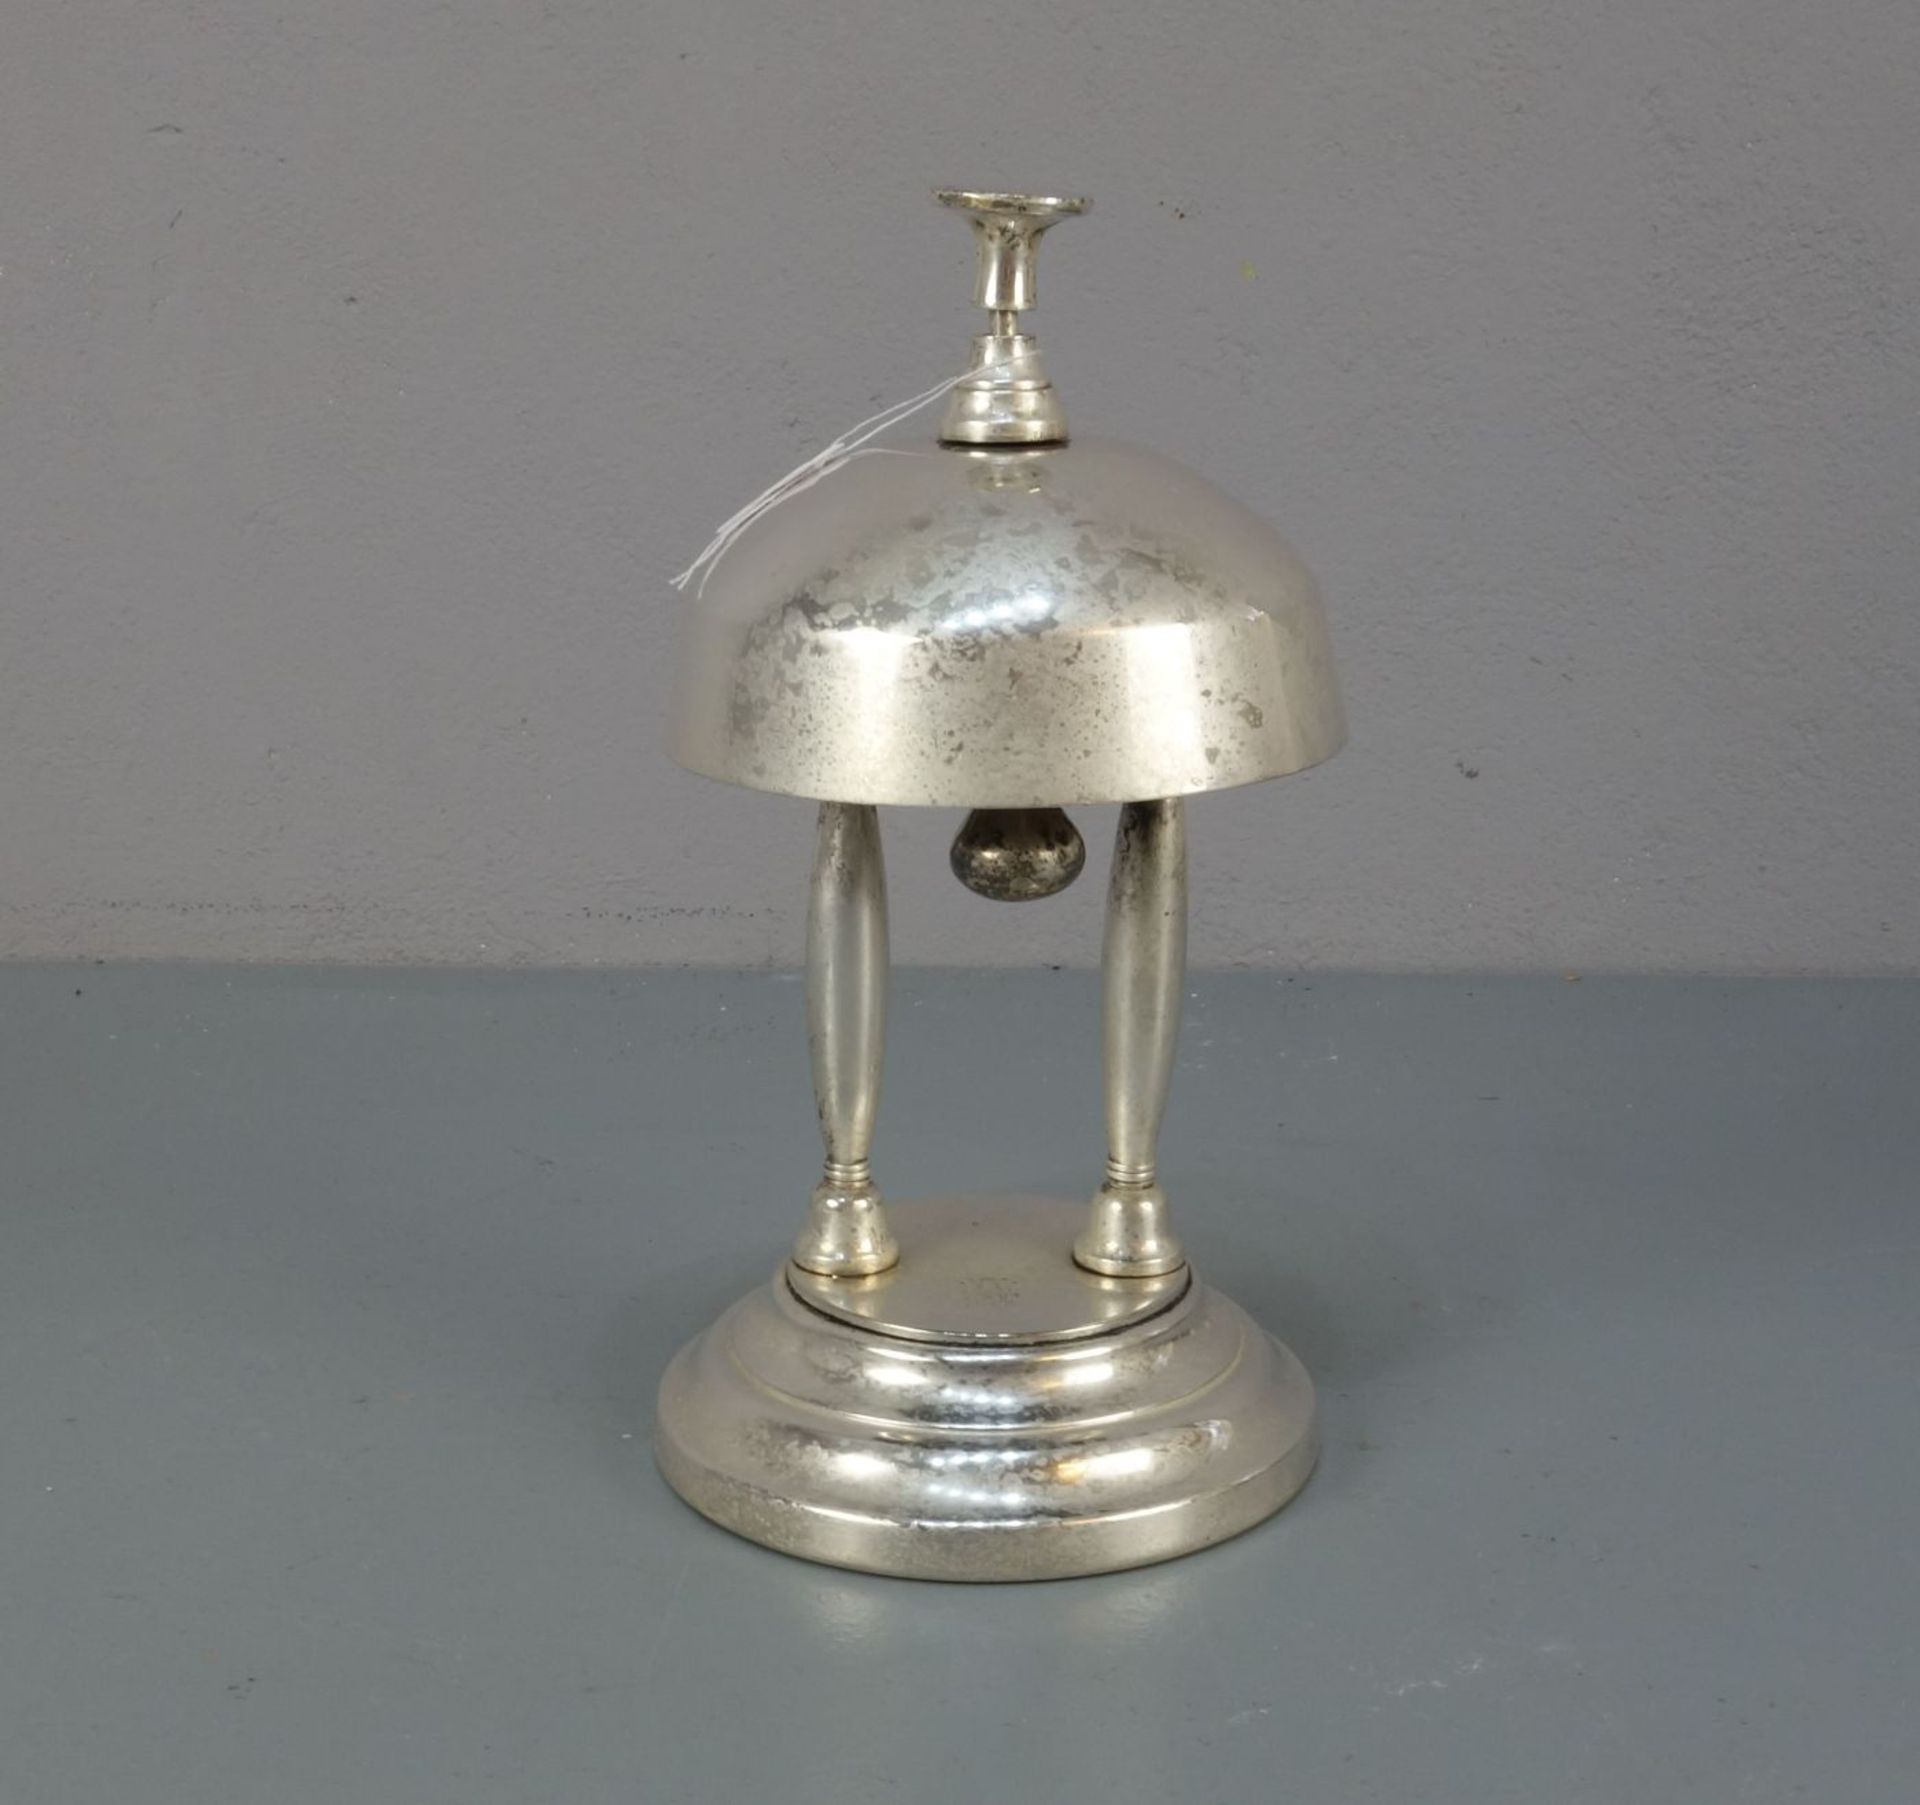 ART DÉCO TISCHGLOCKE / art déco table bell, versilbertes Metall, unter dem Stand gemarkt "Franz